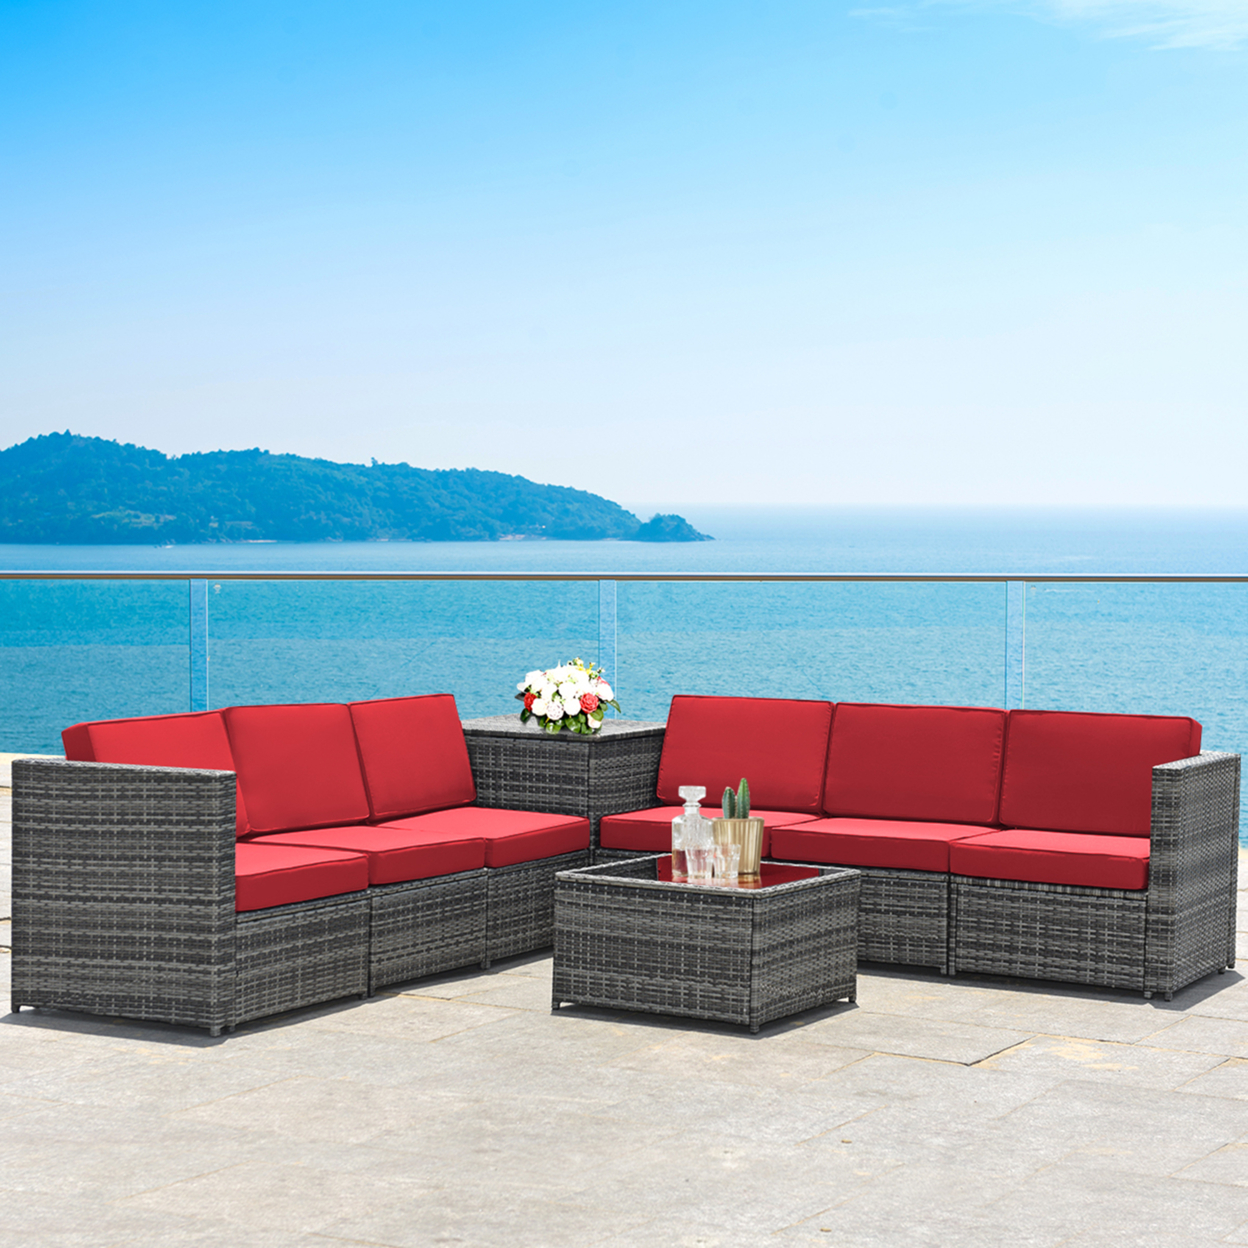 8PCS Patio Rattan Sofa Sectional Conversation Furniture Set W/ Red Cushion